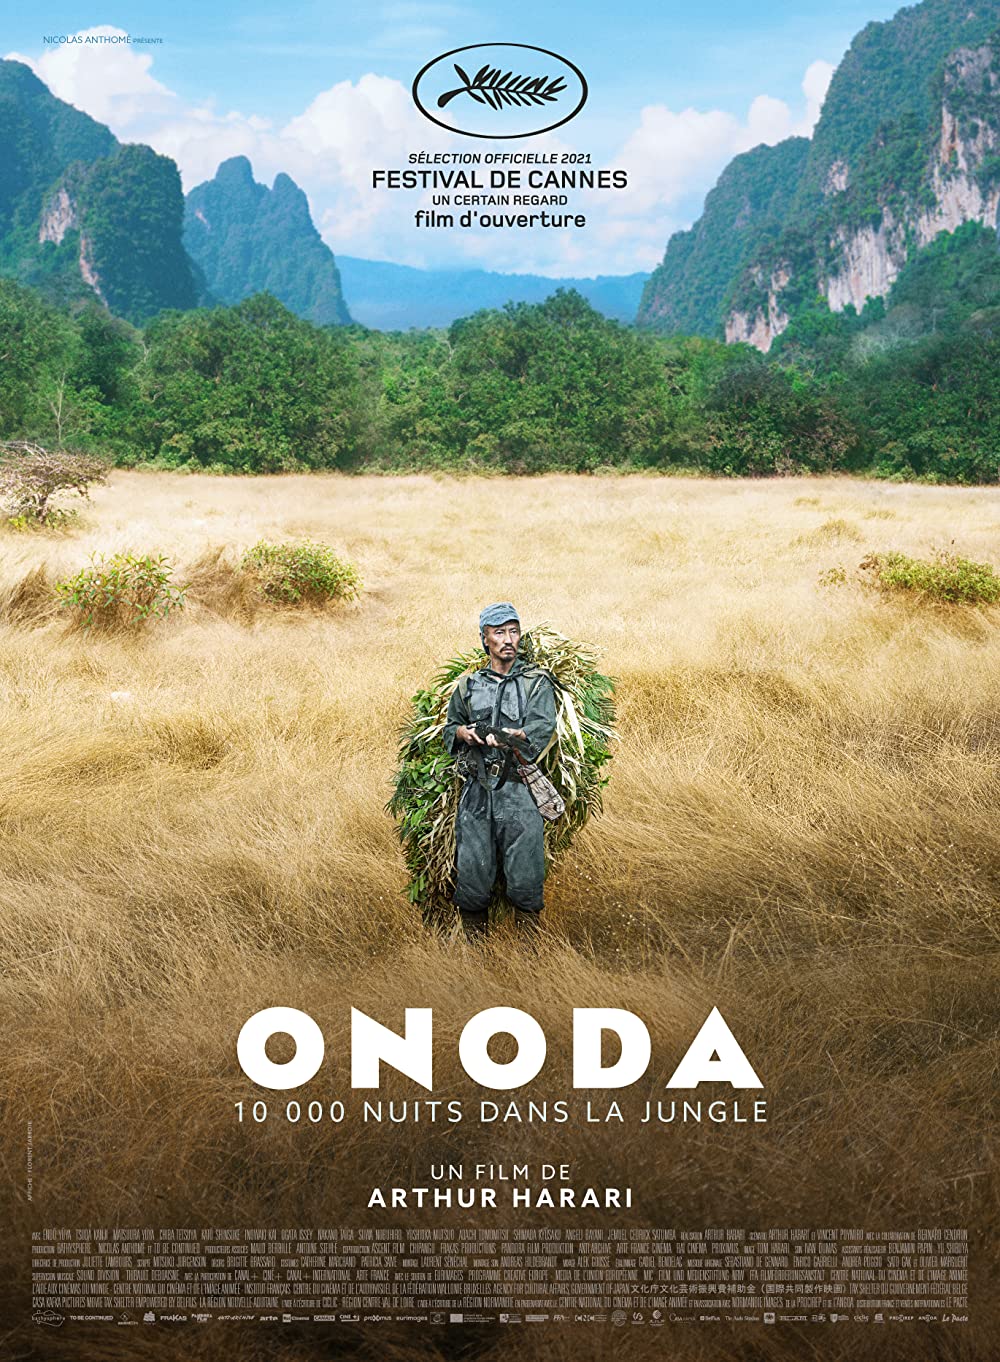 Stiahni si Filmy s titulkama  Onoda / 10 000 nuits dans la jungle (2021)[1080p] = CSFD 79%